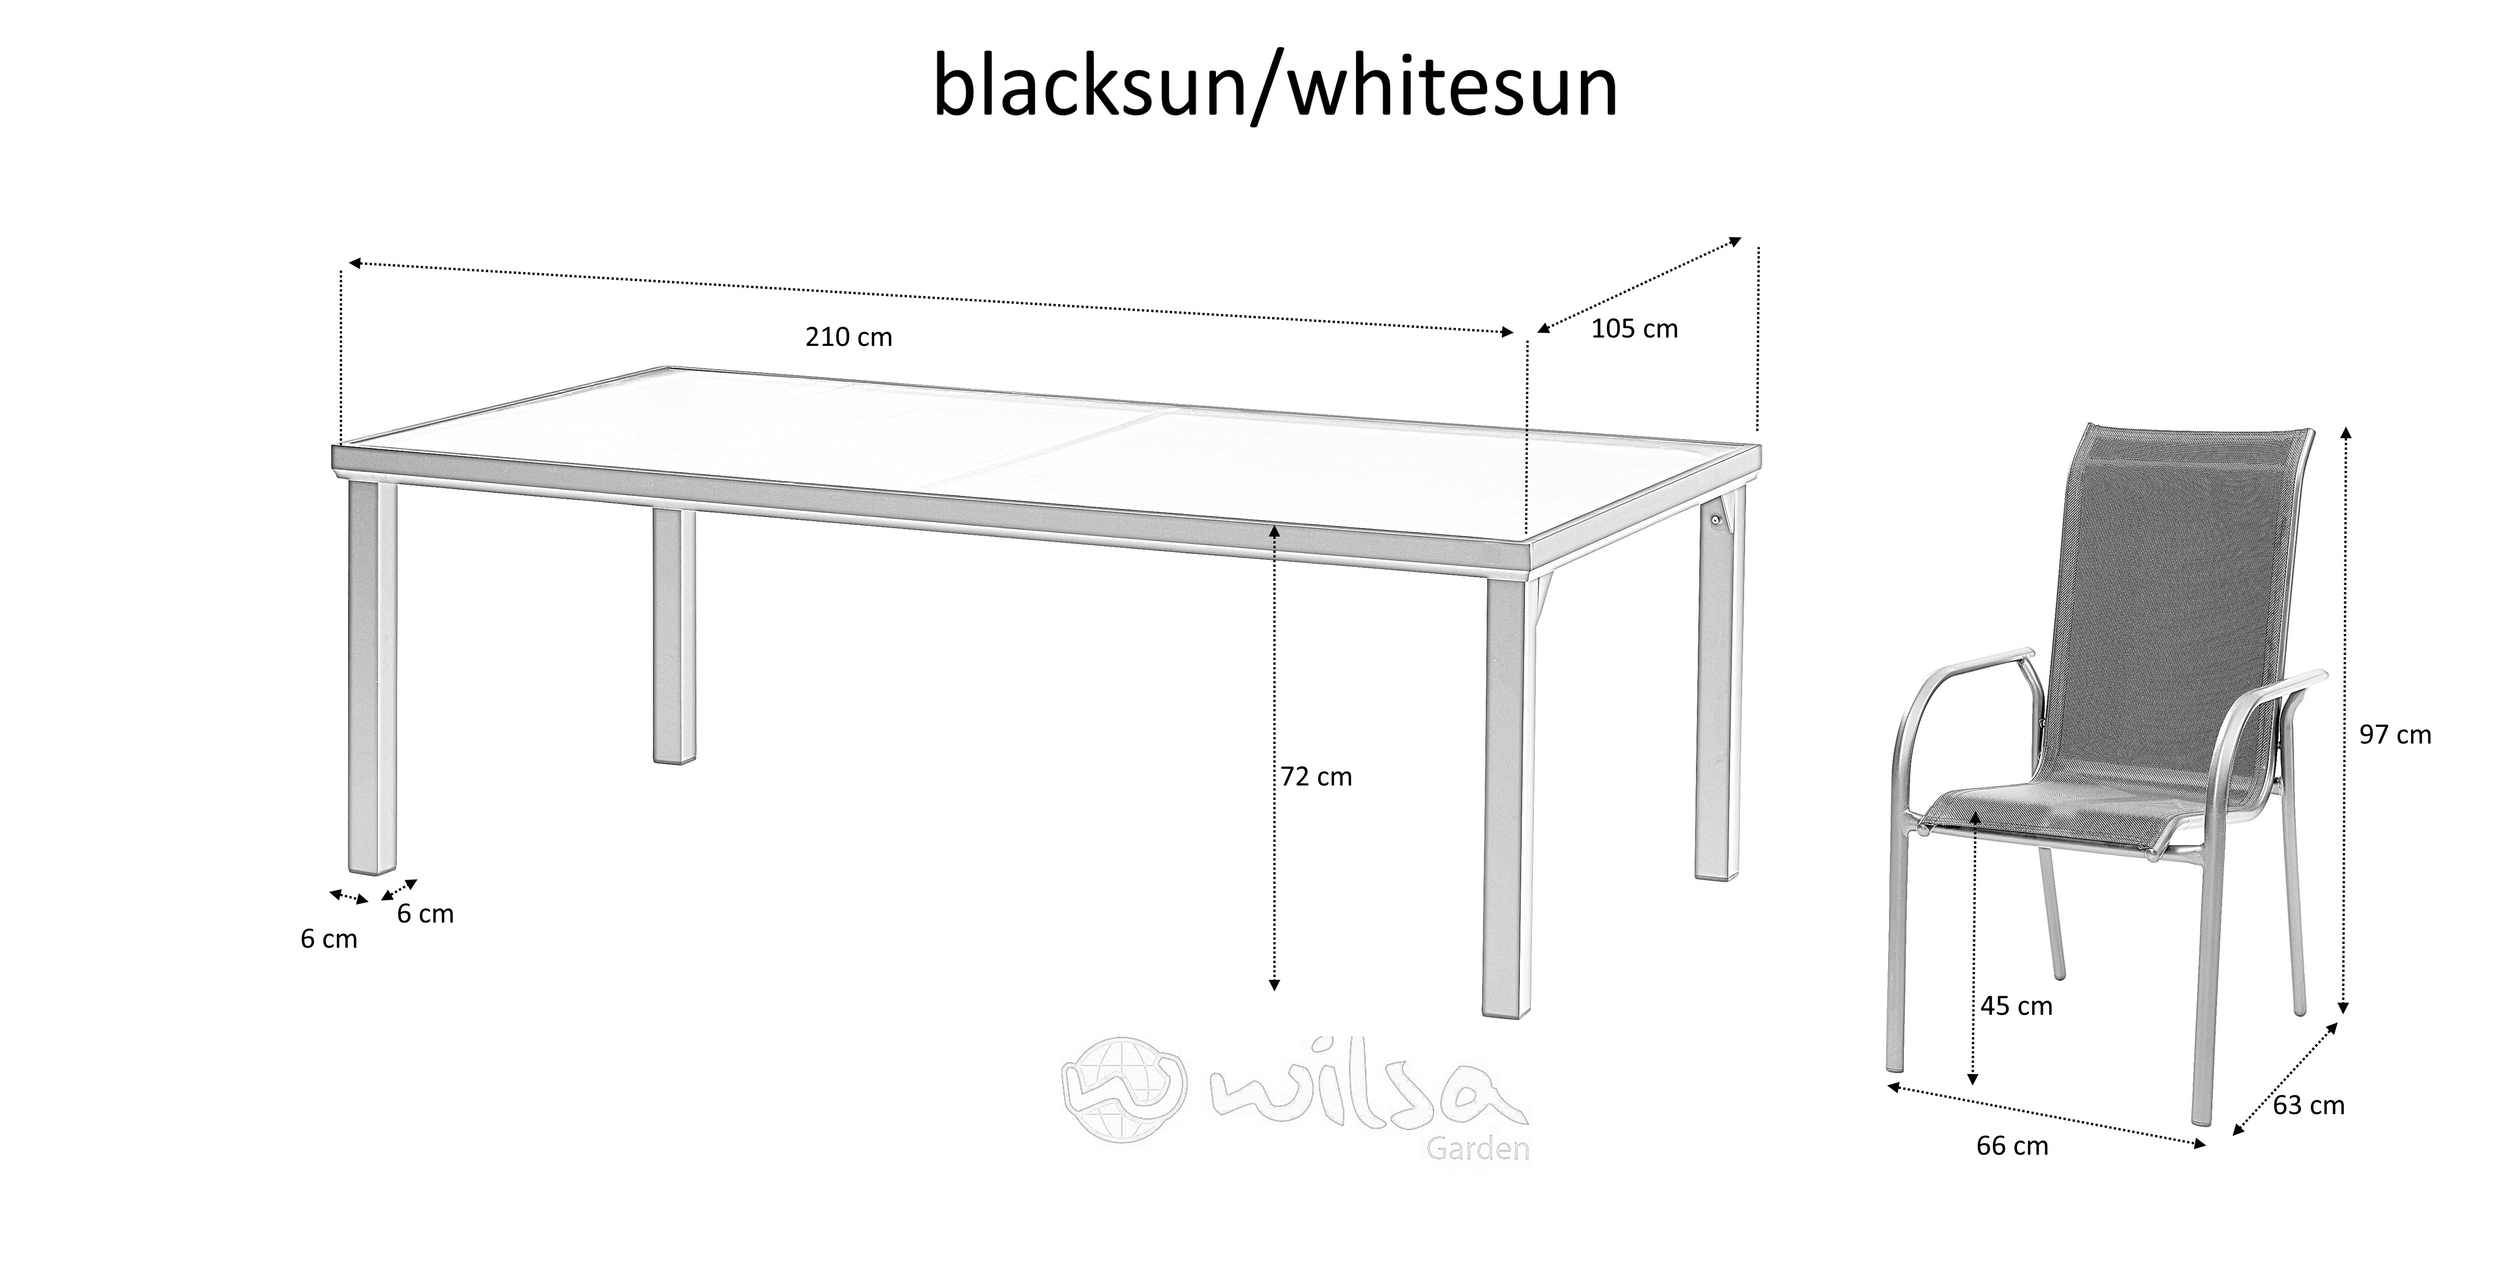 BlackSun-WhiteSun